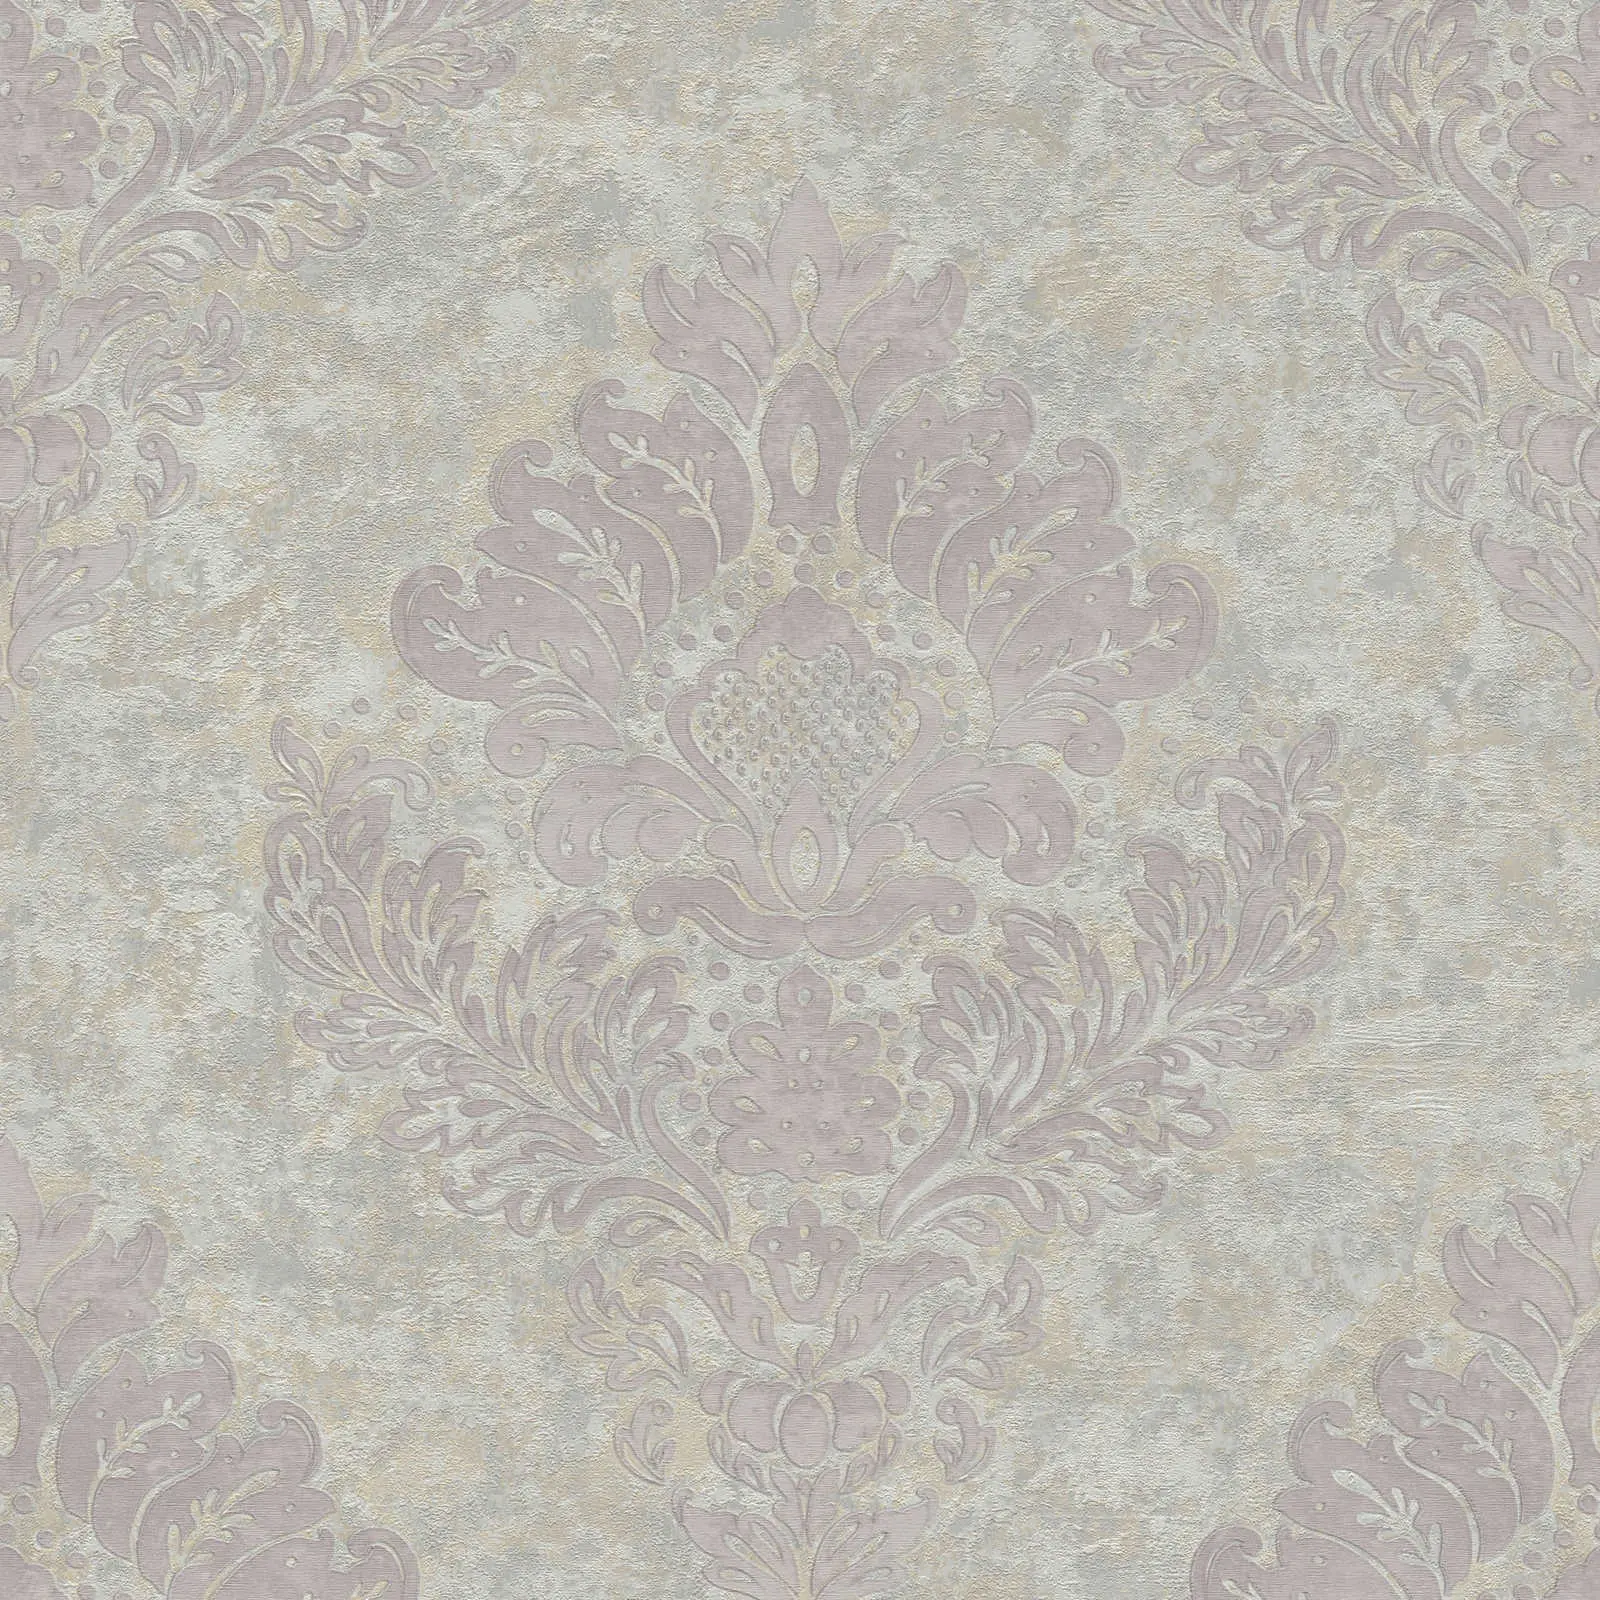 A.S. Creation Vliestapete 37901-4 - mit floralen Ornamenten & Metallic-Effekt, beige, grau